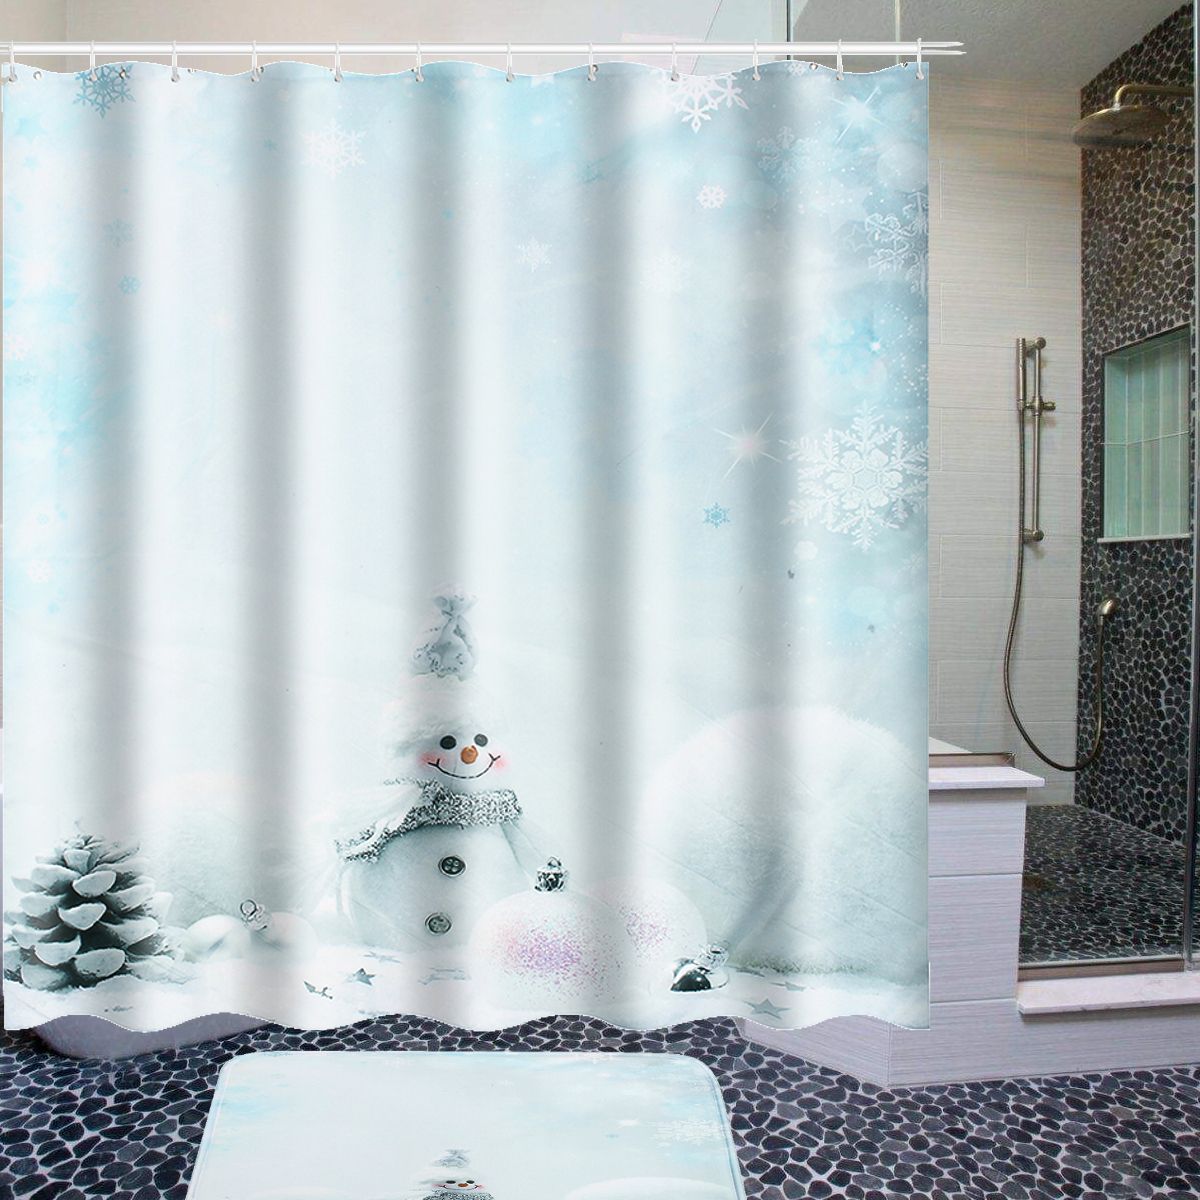 Bathroom-Set-Non-Slip-Rug-Lid-Toilet-Cover-Bathroom-Mat-Shower-Curtain-Snowman-1461471